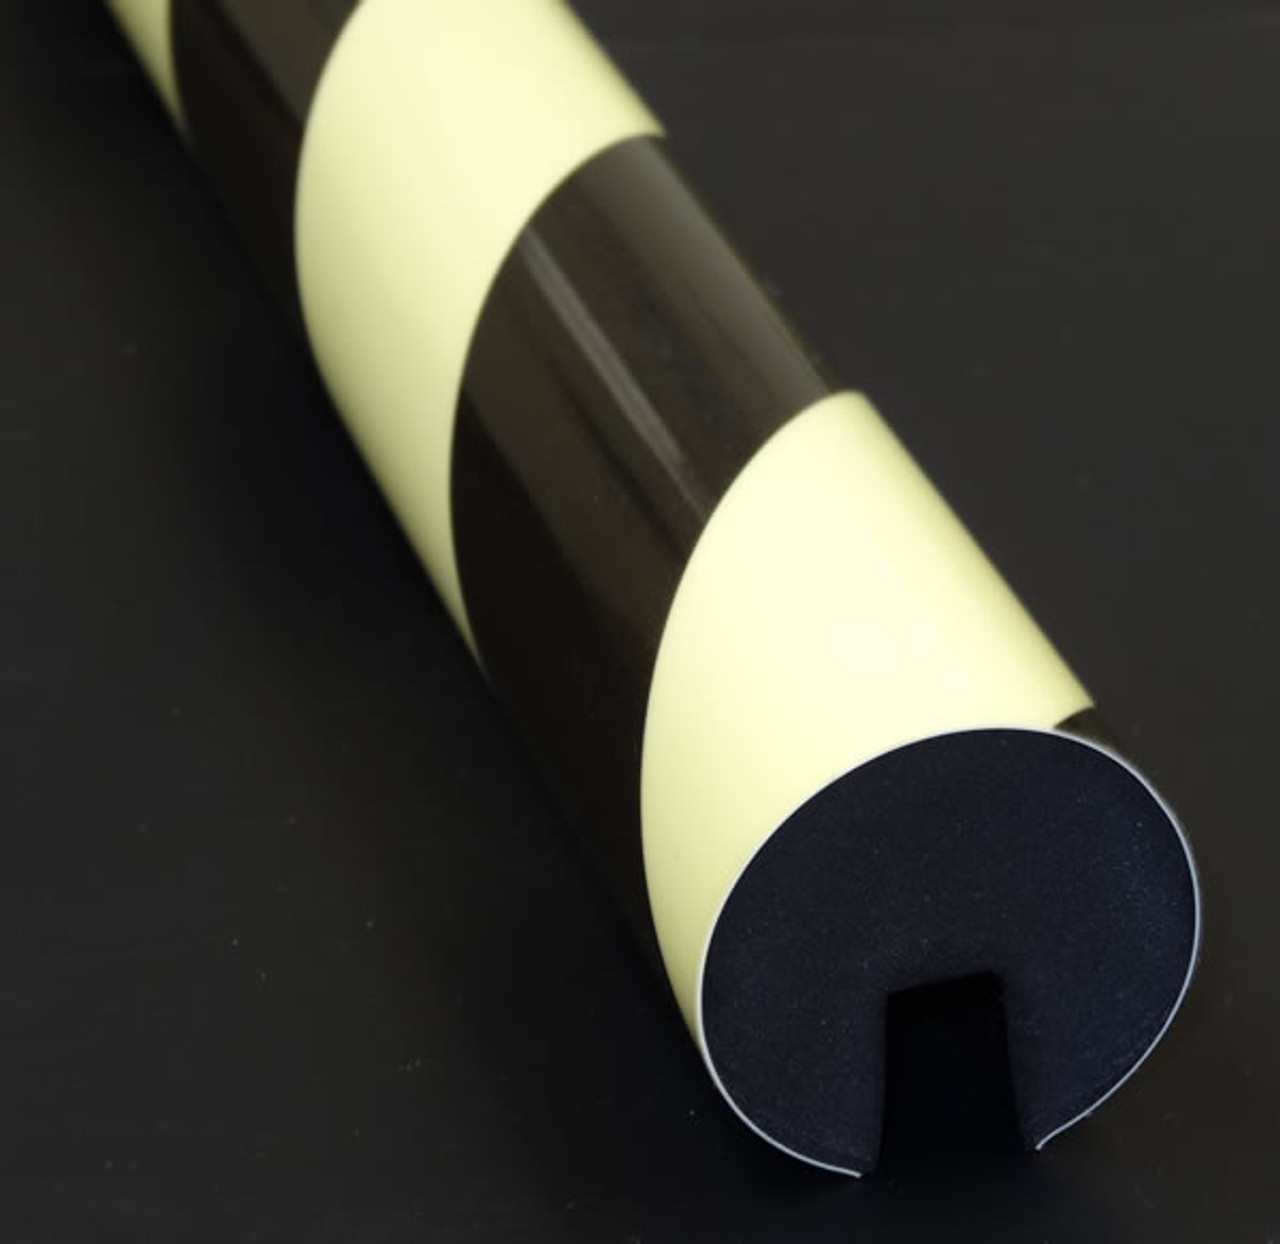 American Permalight Type B Edge Protector, slide-on, non-adhesive, 39.375 Inch x 1.5625 inch Black/Yellow